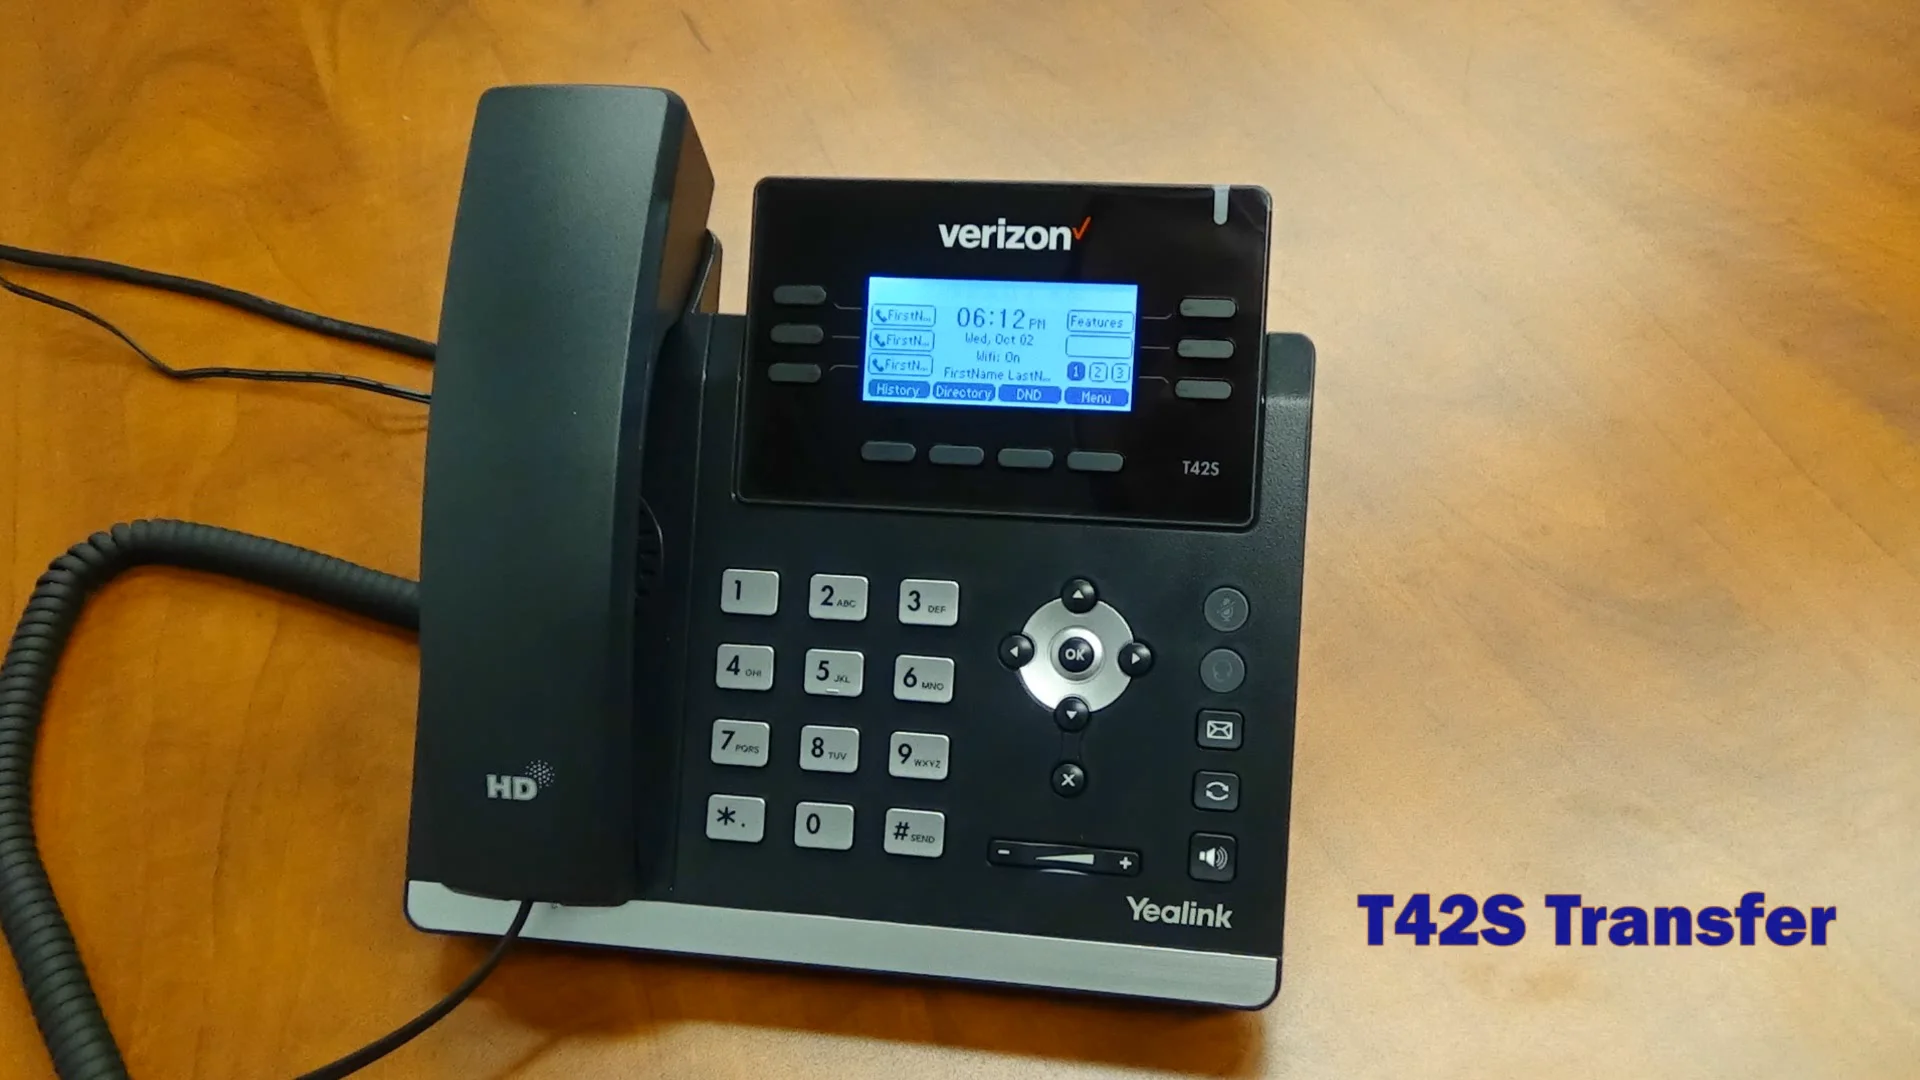 DECT IP Phone - Verizon One Talk on Vimeo